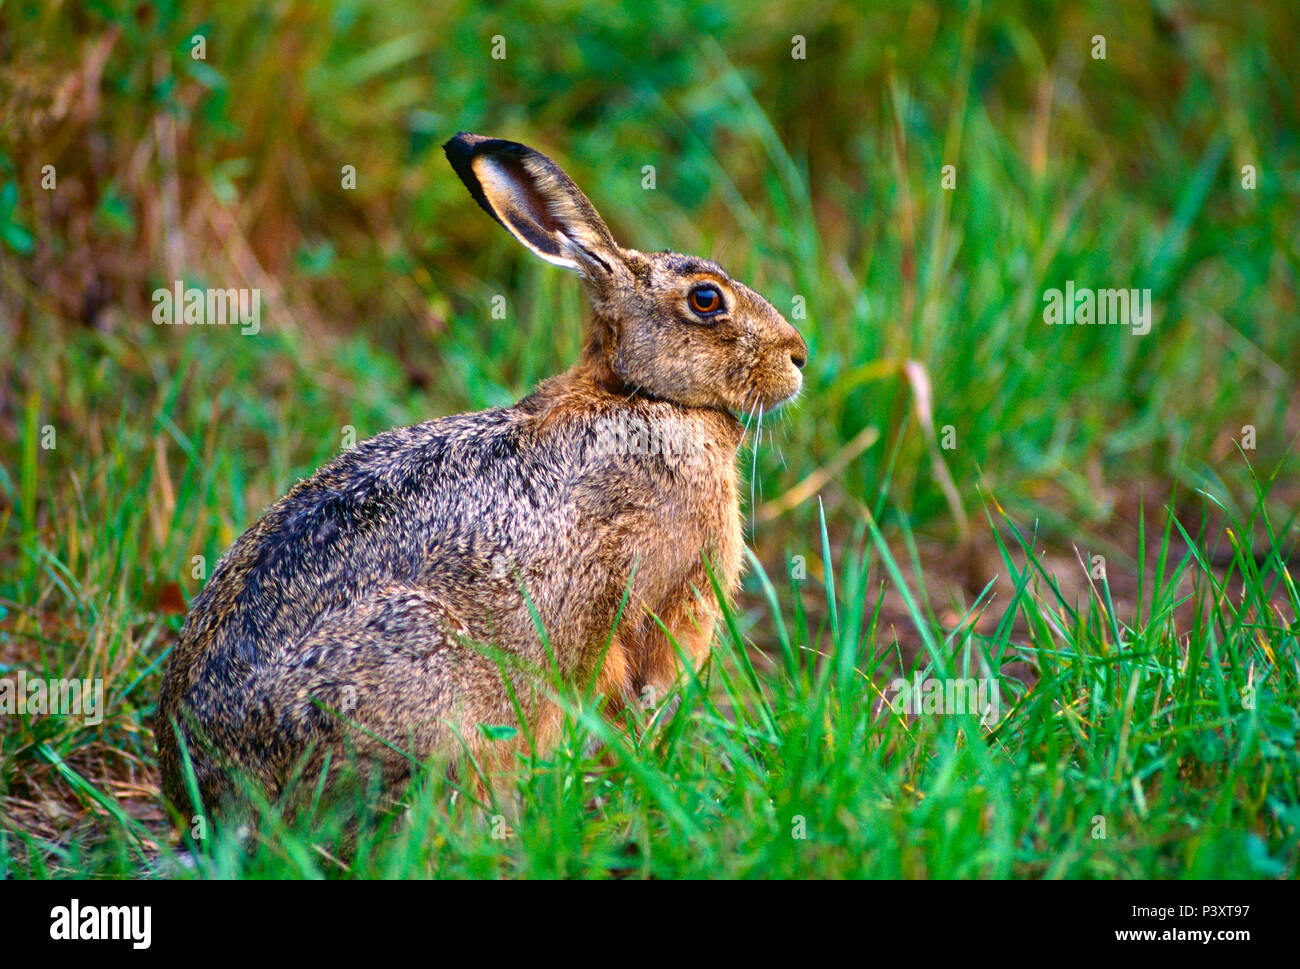 European Hare, Lepus europaeus, Leporidae, Hare, mammal, animal, Ängsön Nature reserve, Västmanland, Sweden Stock Photo